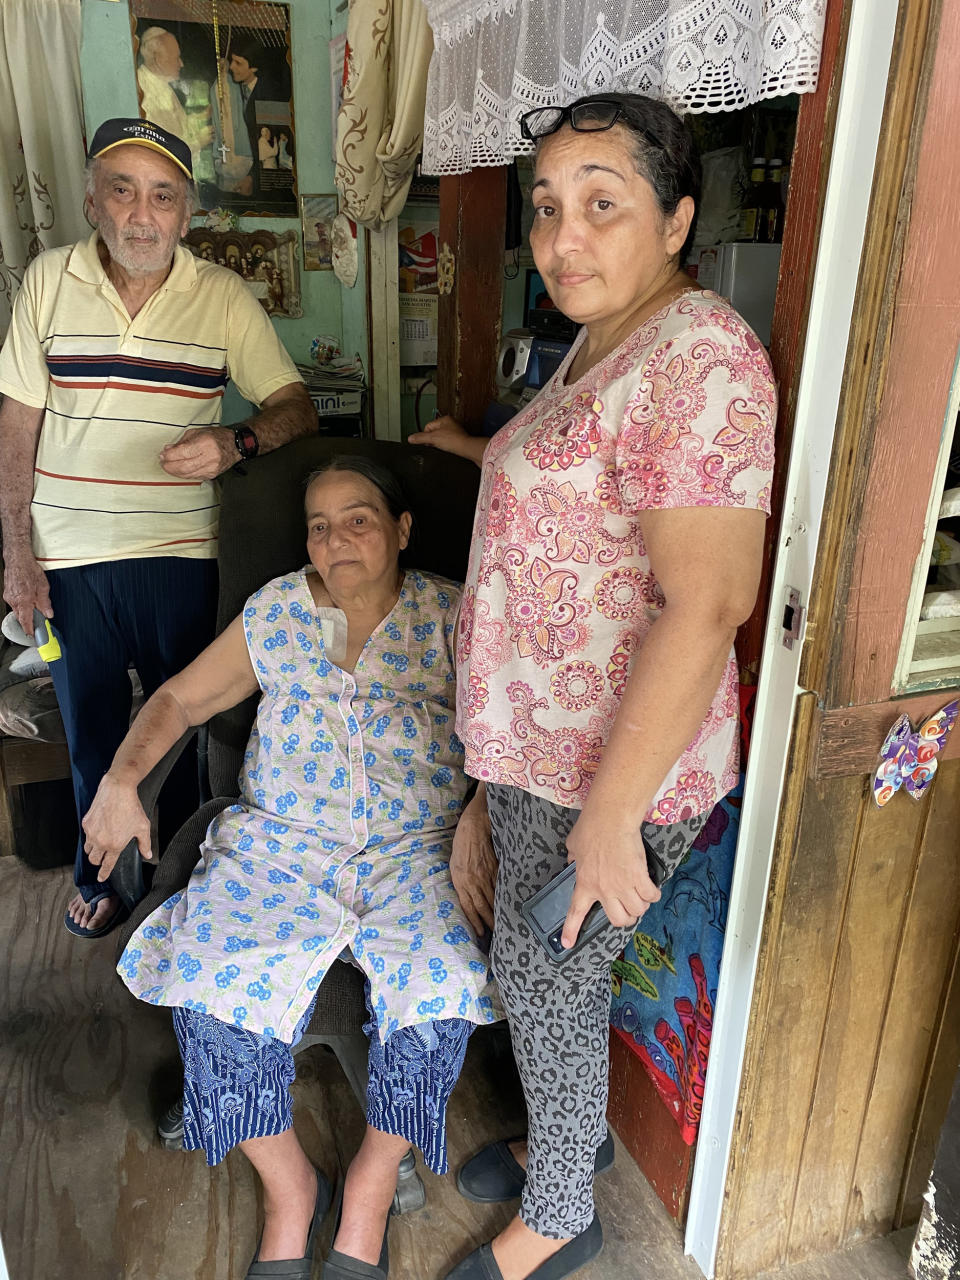 Carmen Cruz Vázquez, right, with her parents, Carmen Vázquez Ramos and Juan Cruz Camacho, in their home in San Germán, Puerto Rico. (Daniella Silva / NBC News)